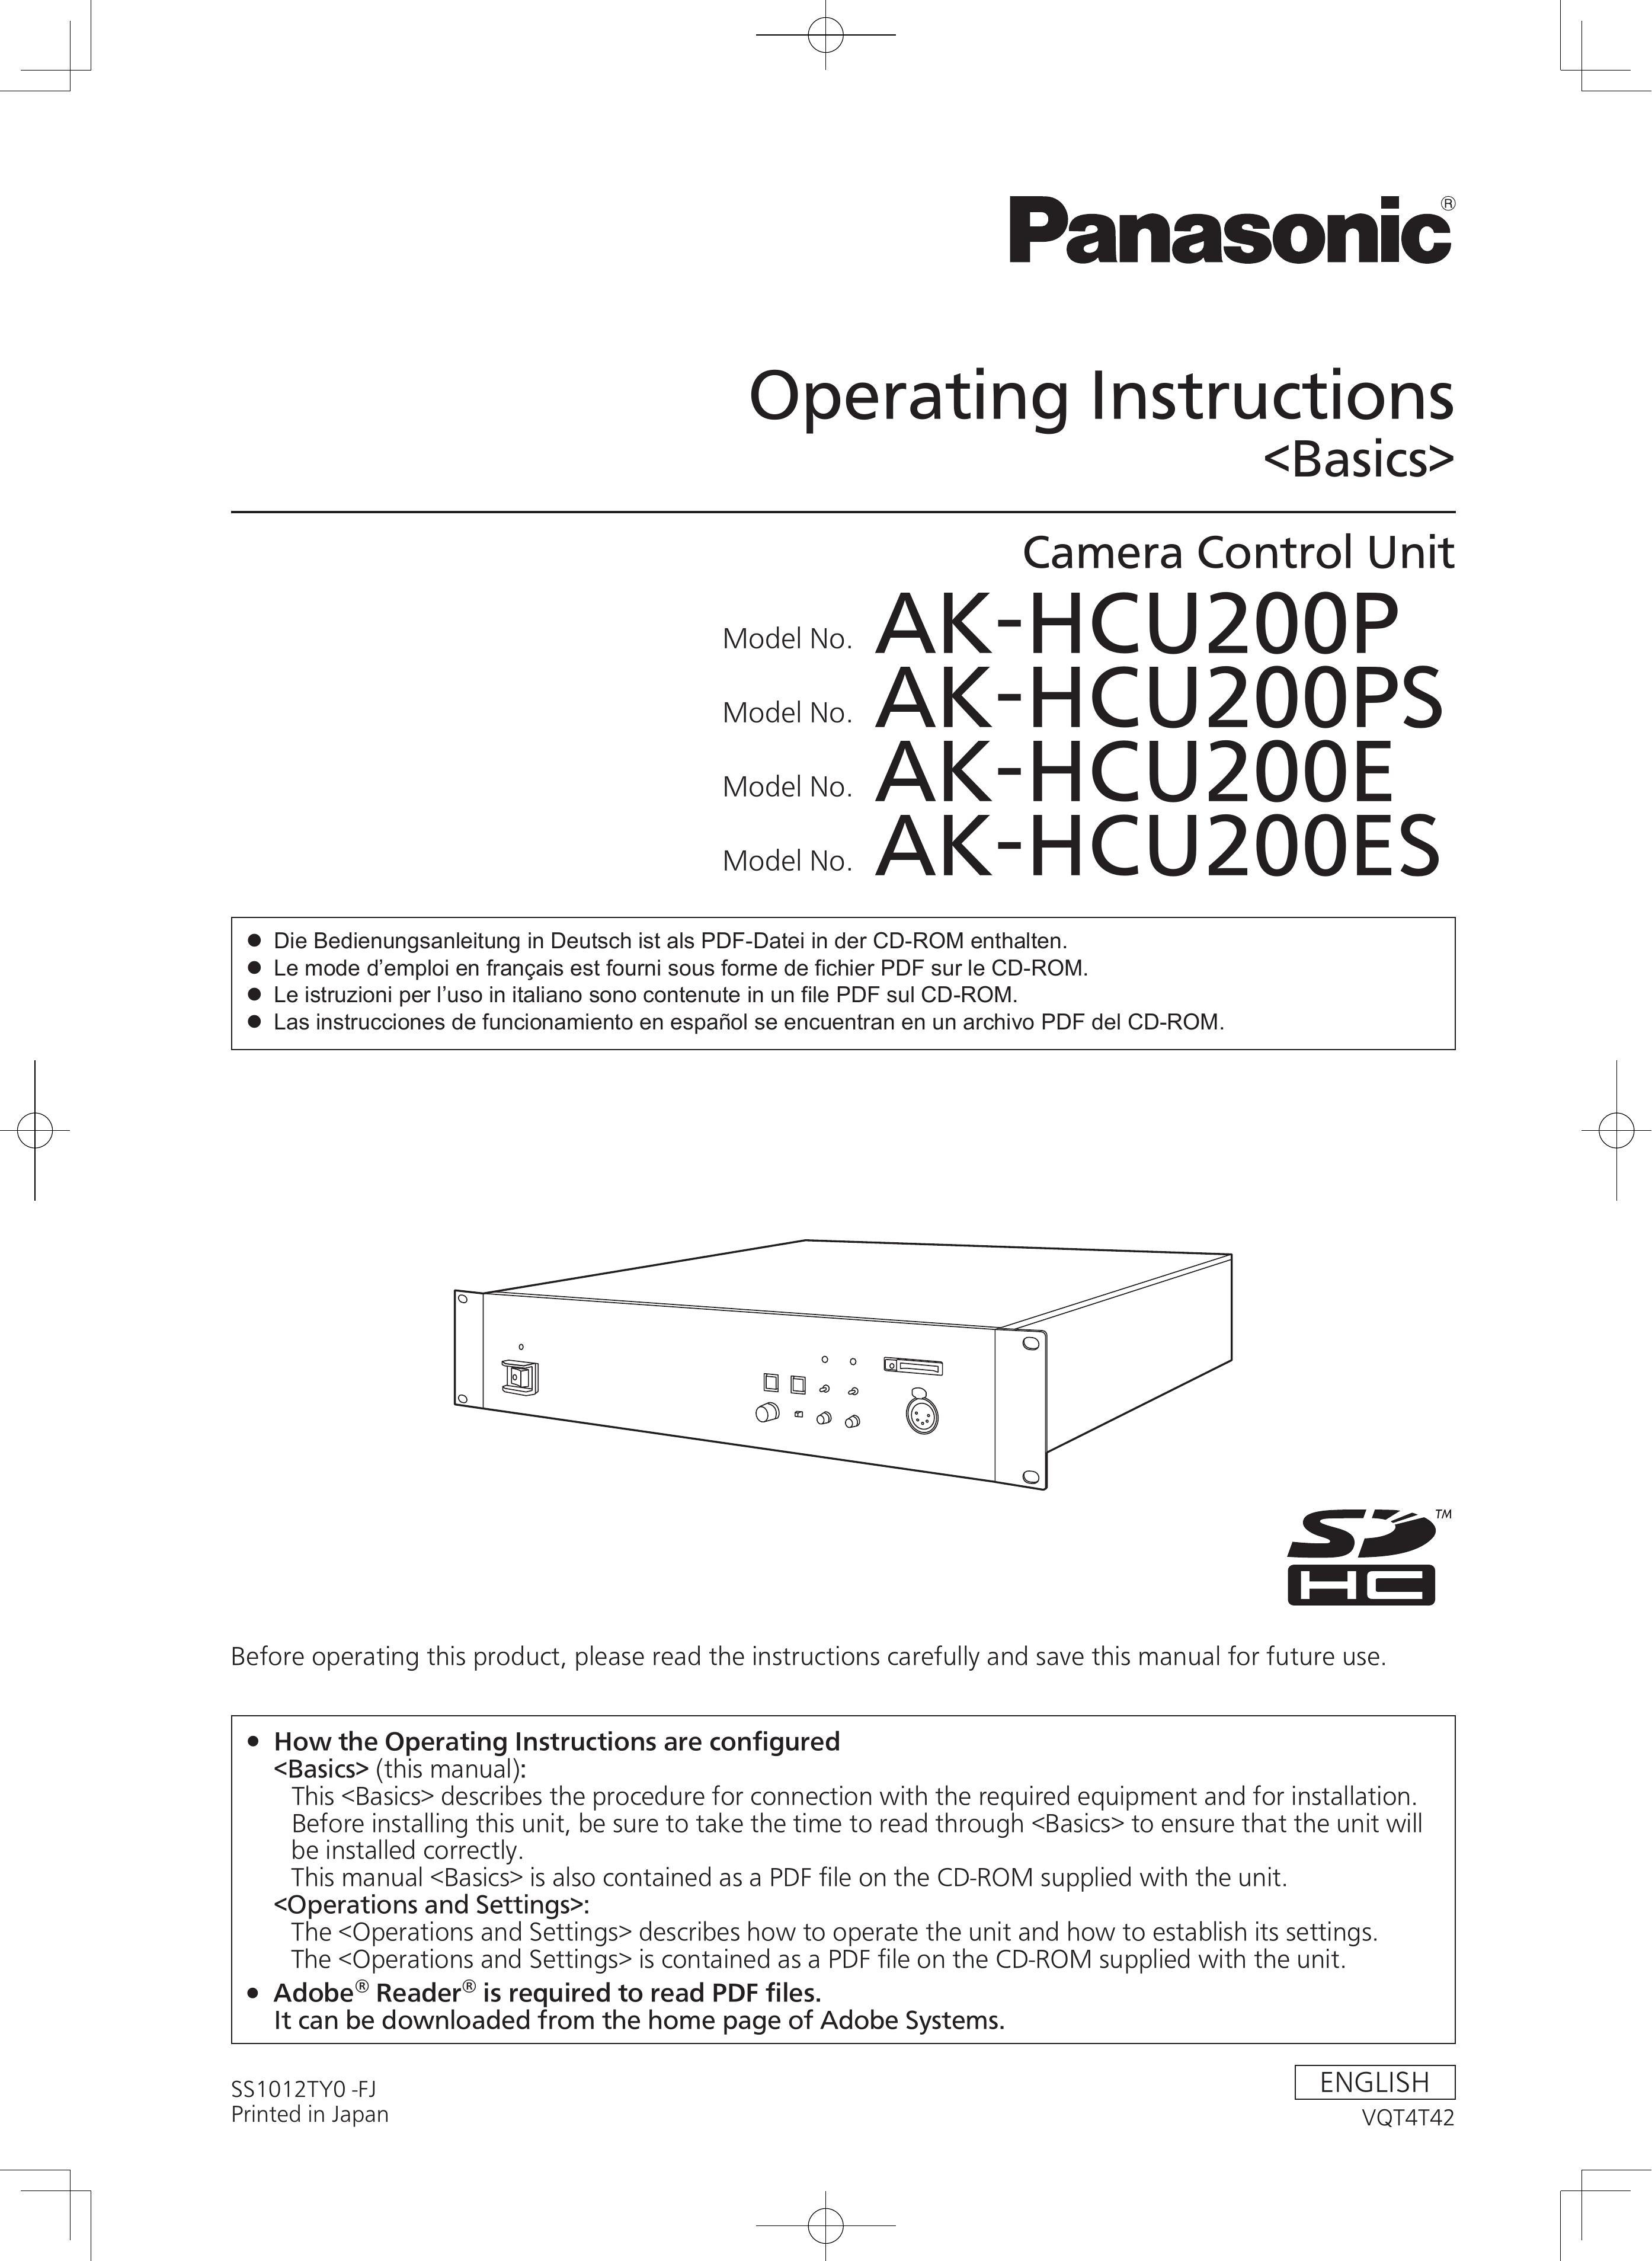 Panasonic AK-HCU200ES Camera Accessories User Manual